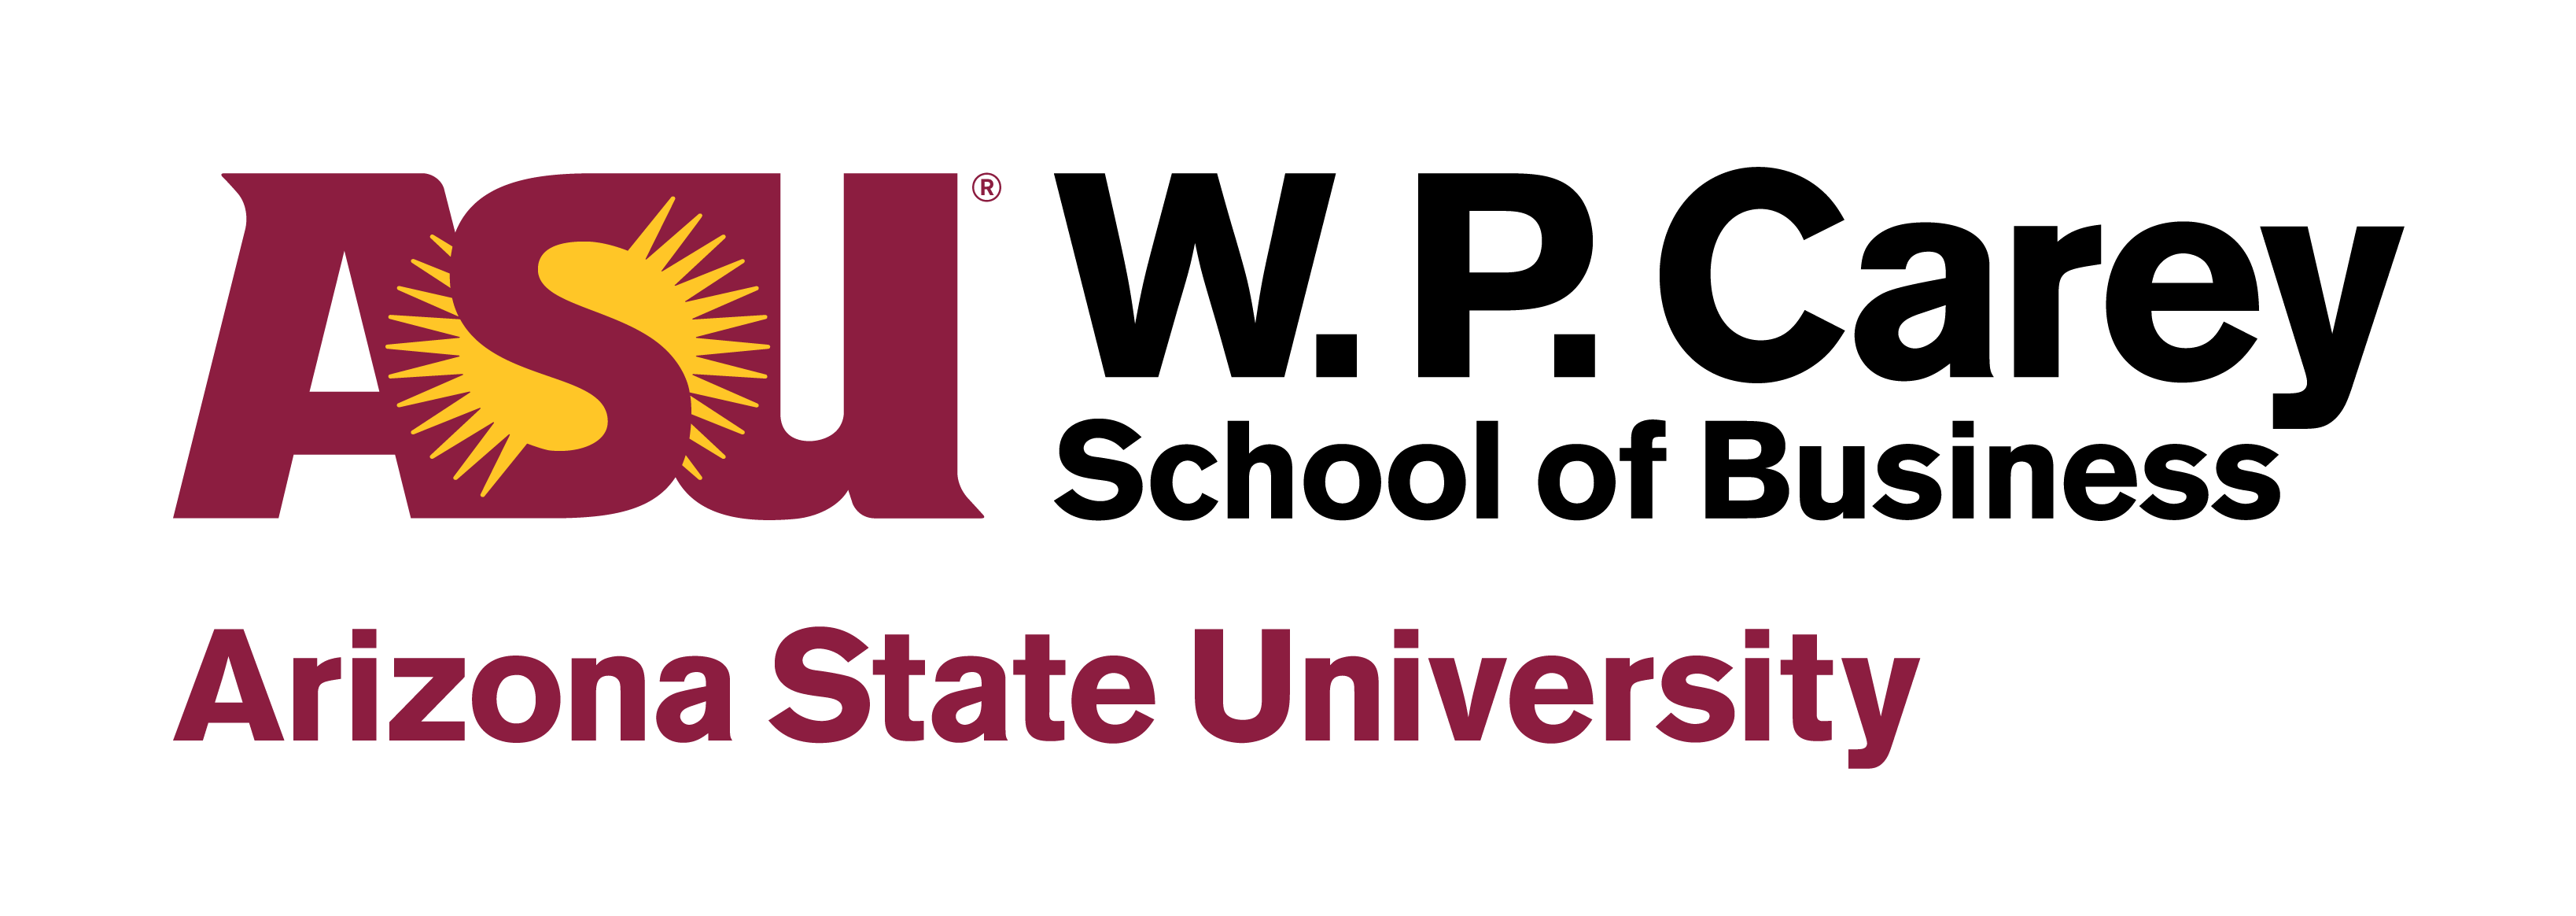 ASU W.P. Carey school of business logo